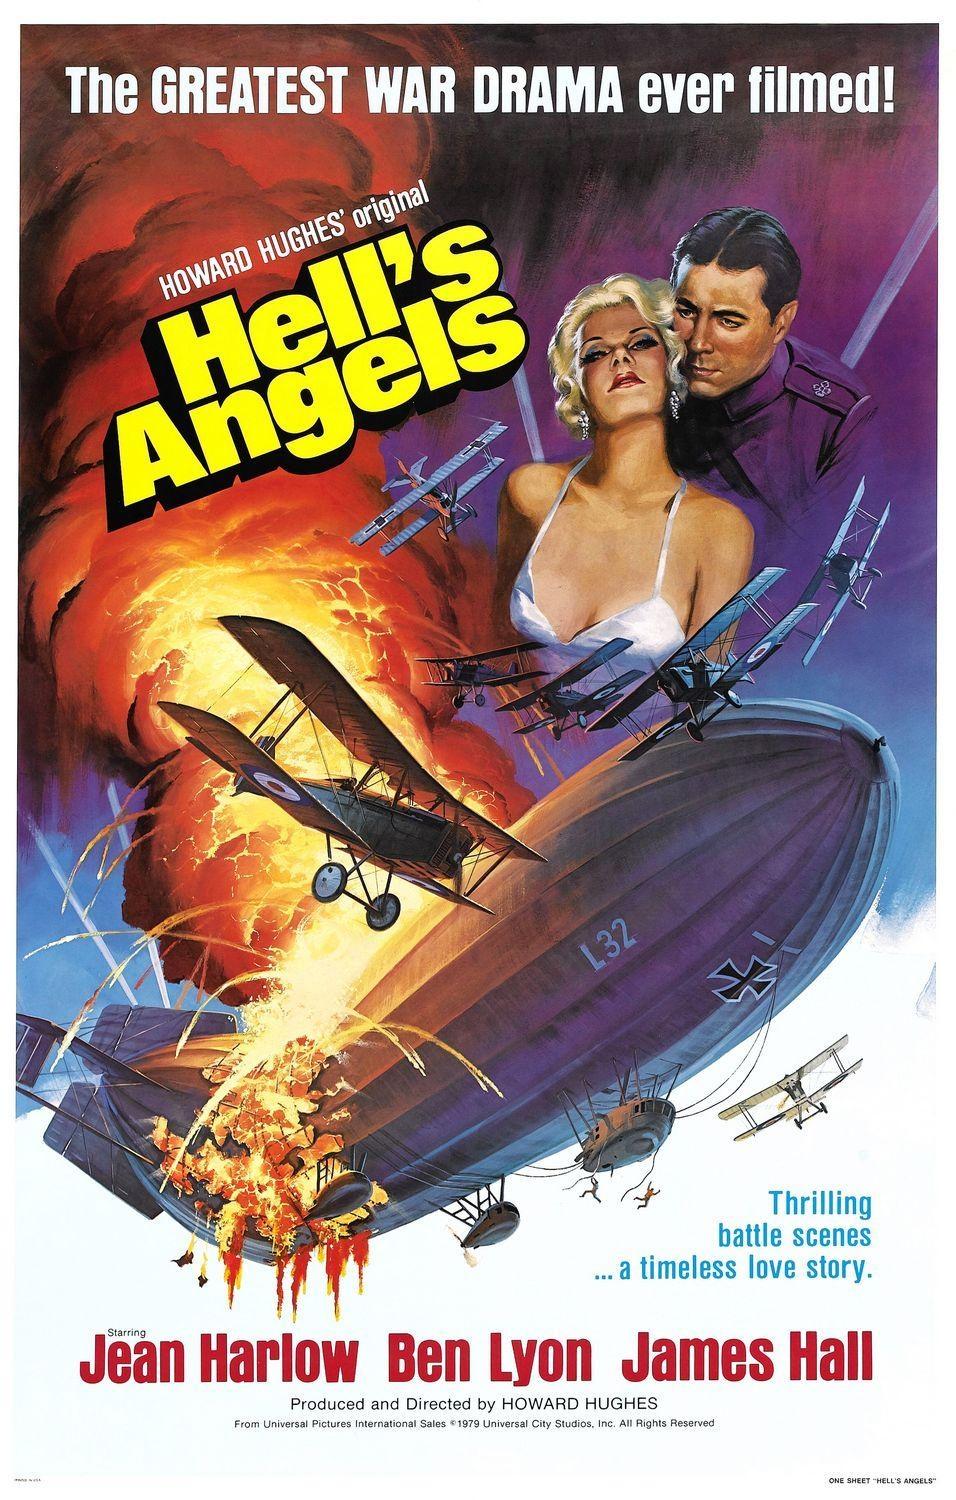 Постер фильма Ангелы ада | Hell's Angels